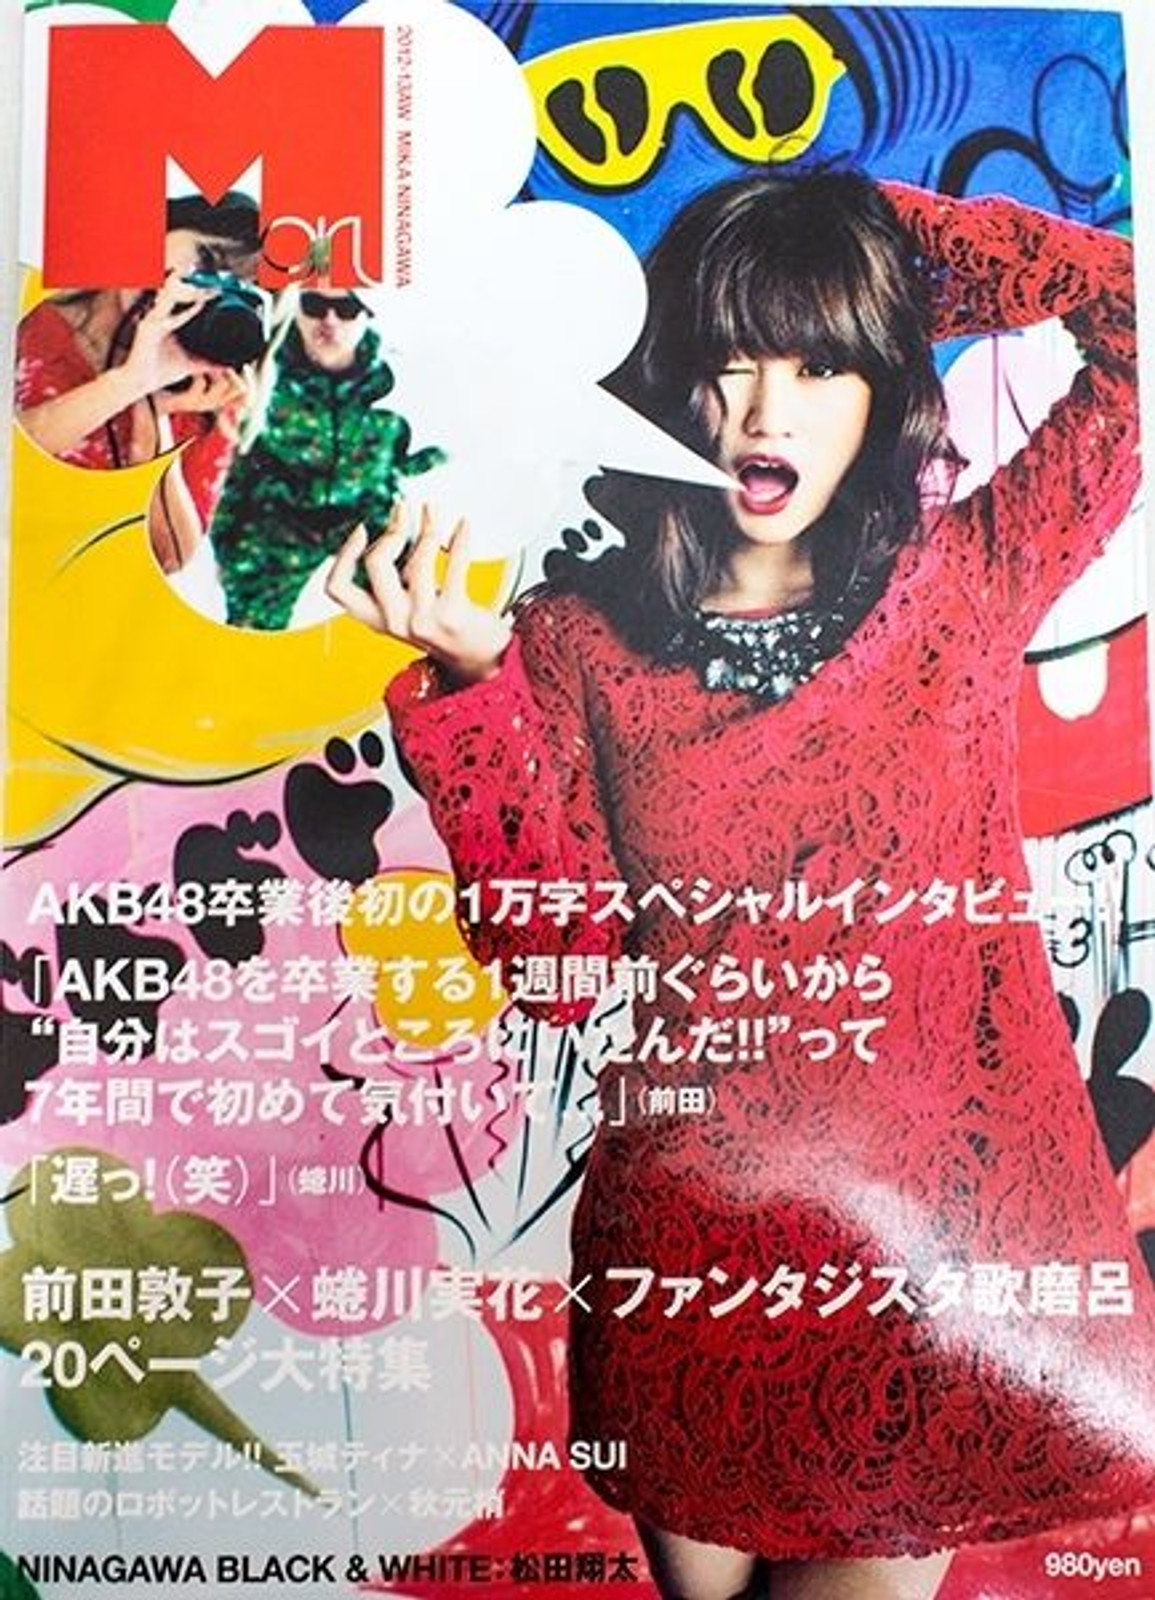 M-Girl Japanese Magazine MIKA NINAGAWA ATSUKO MAEDA AKB48 SHOTA MATSUDA JAPAN